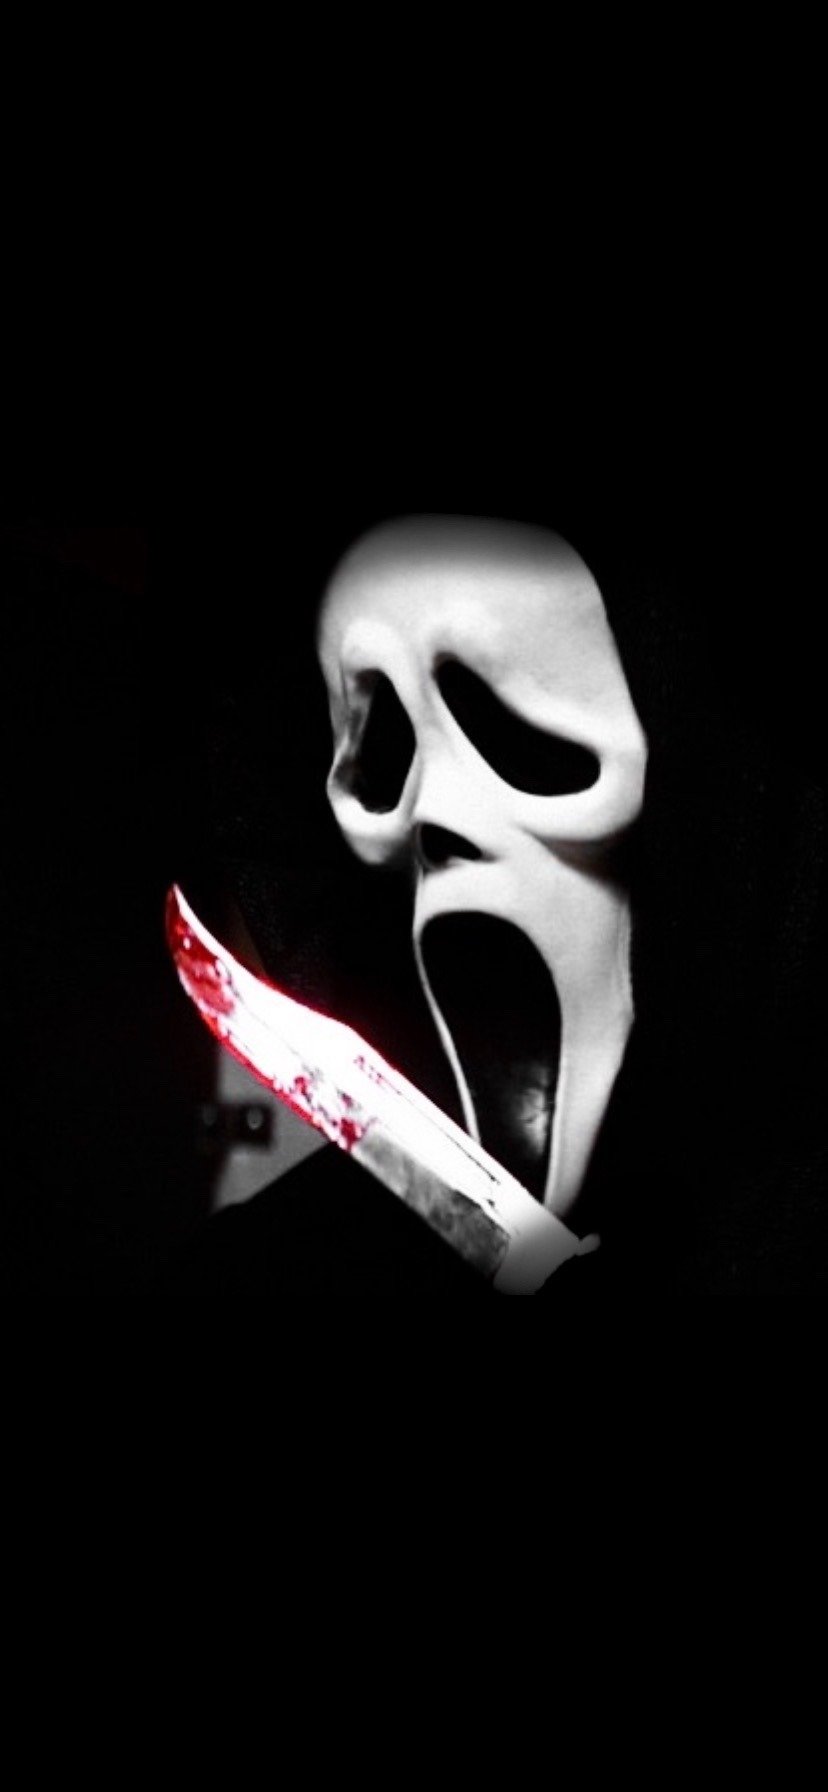 Ghostface from Scream VI 4K wallpaper download